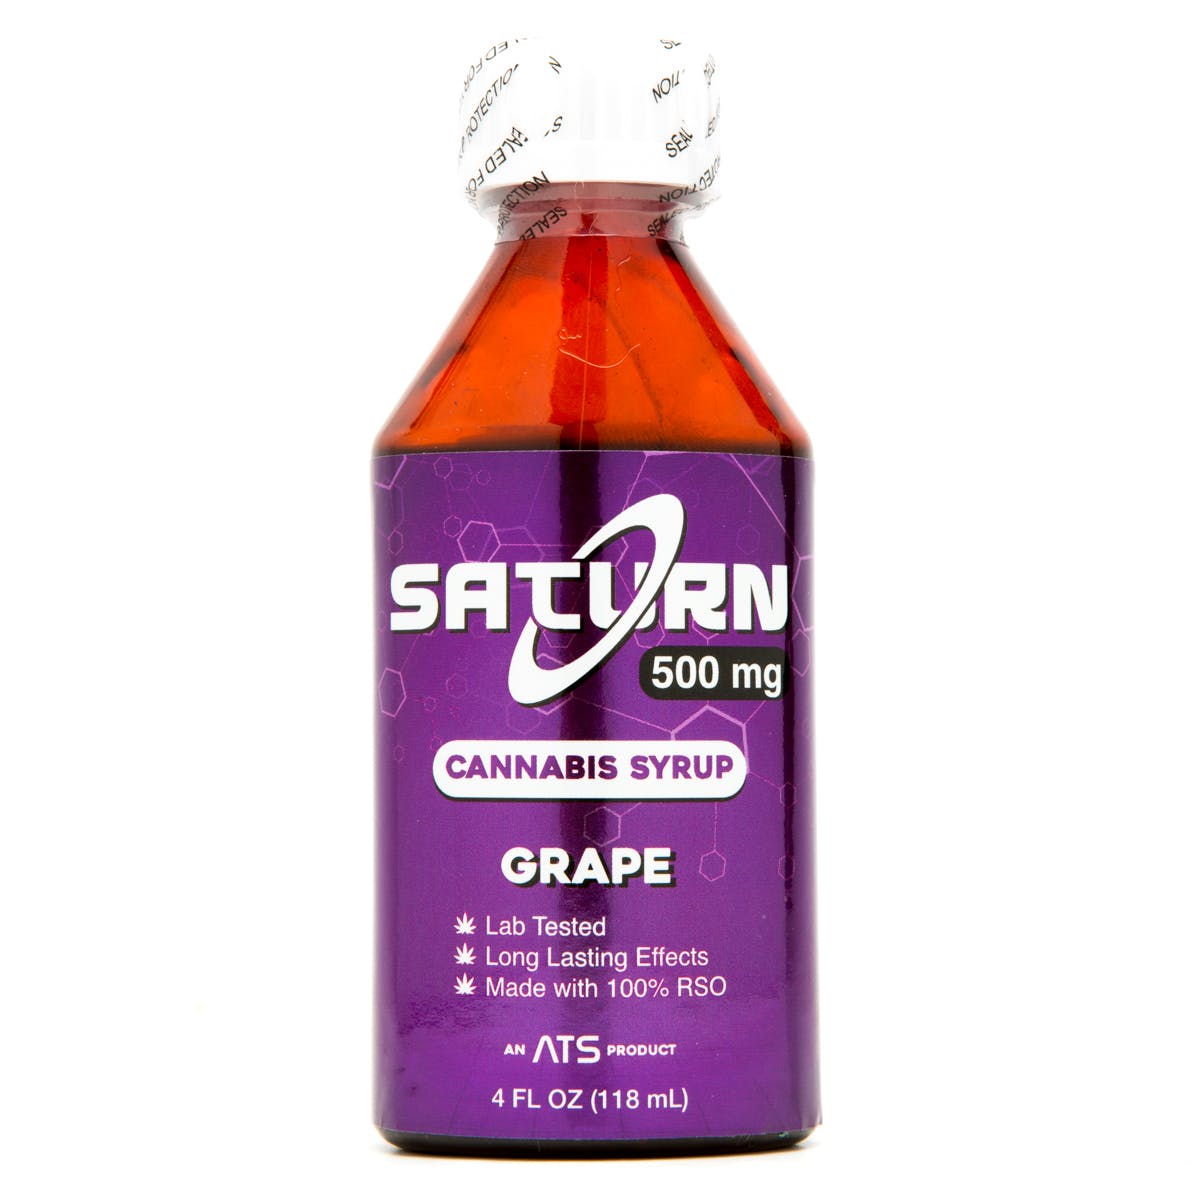 Grape Cannabis Syrup, 500mg